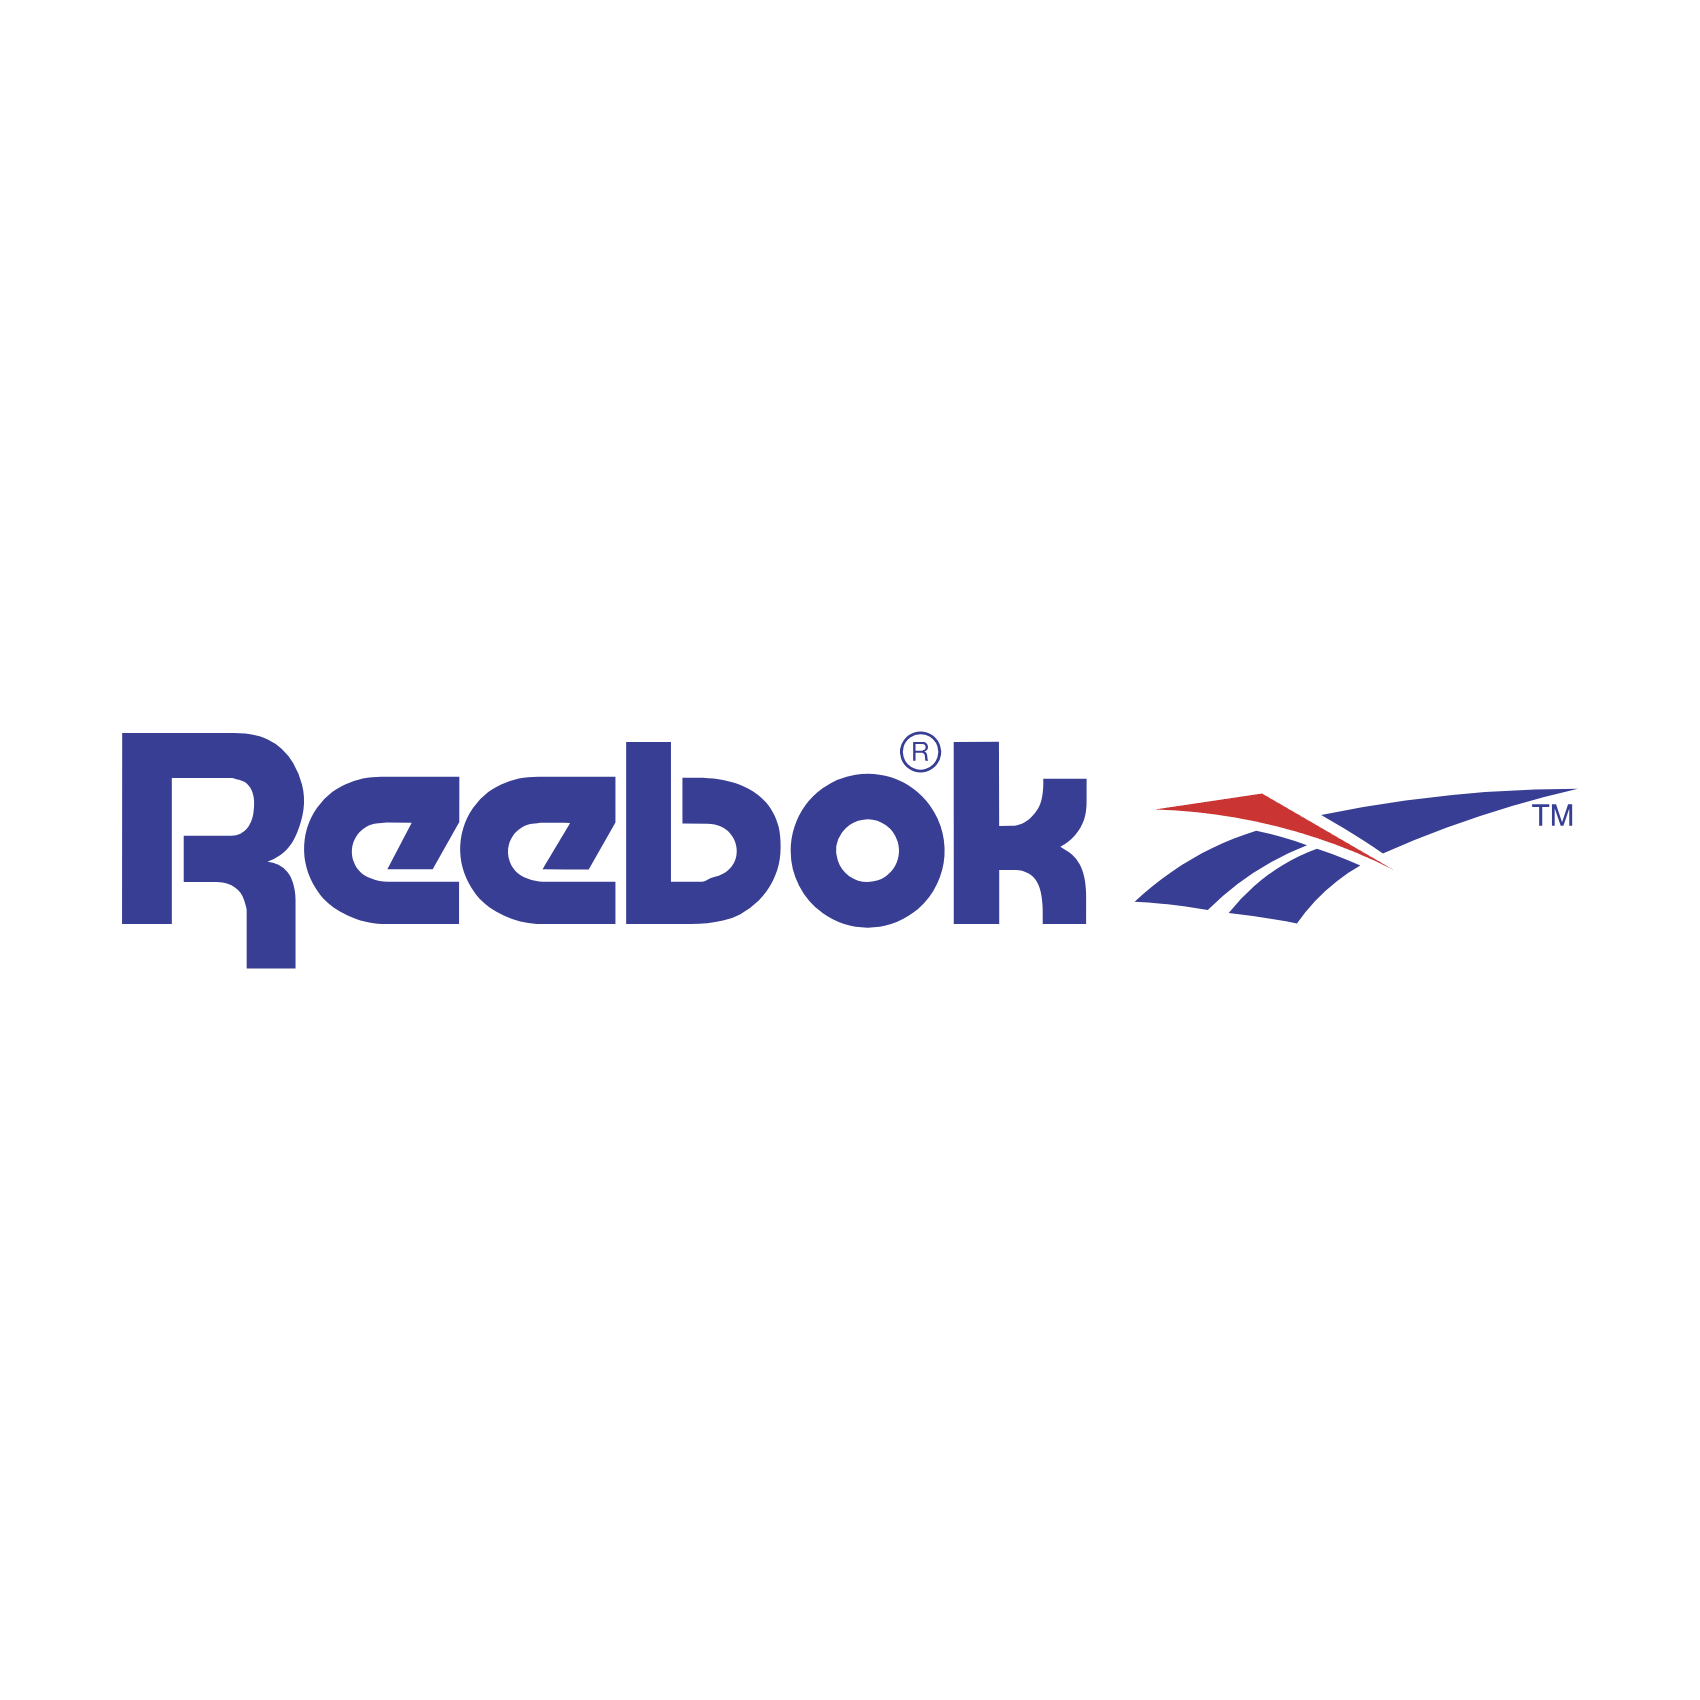 Download Reebok Horizontal Logo PNG and Vector (PDF, SVG, Ai, EPS